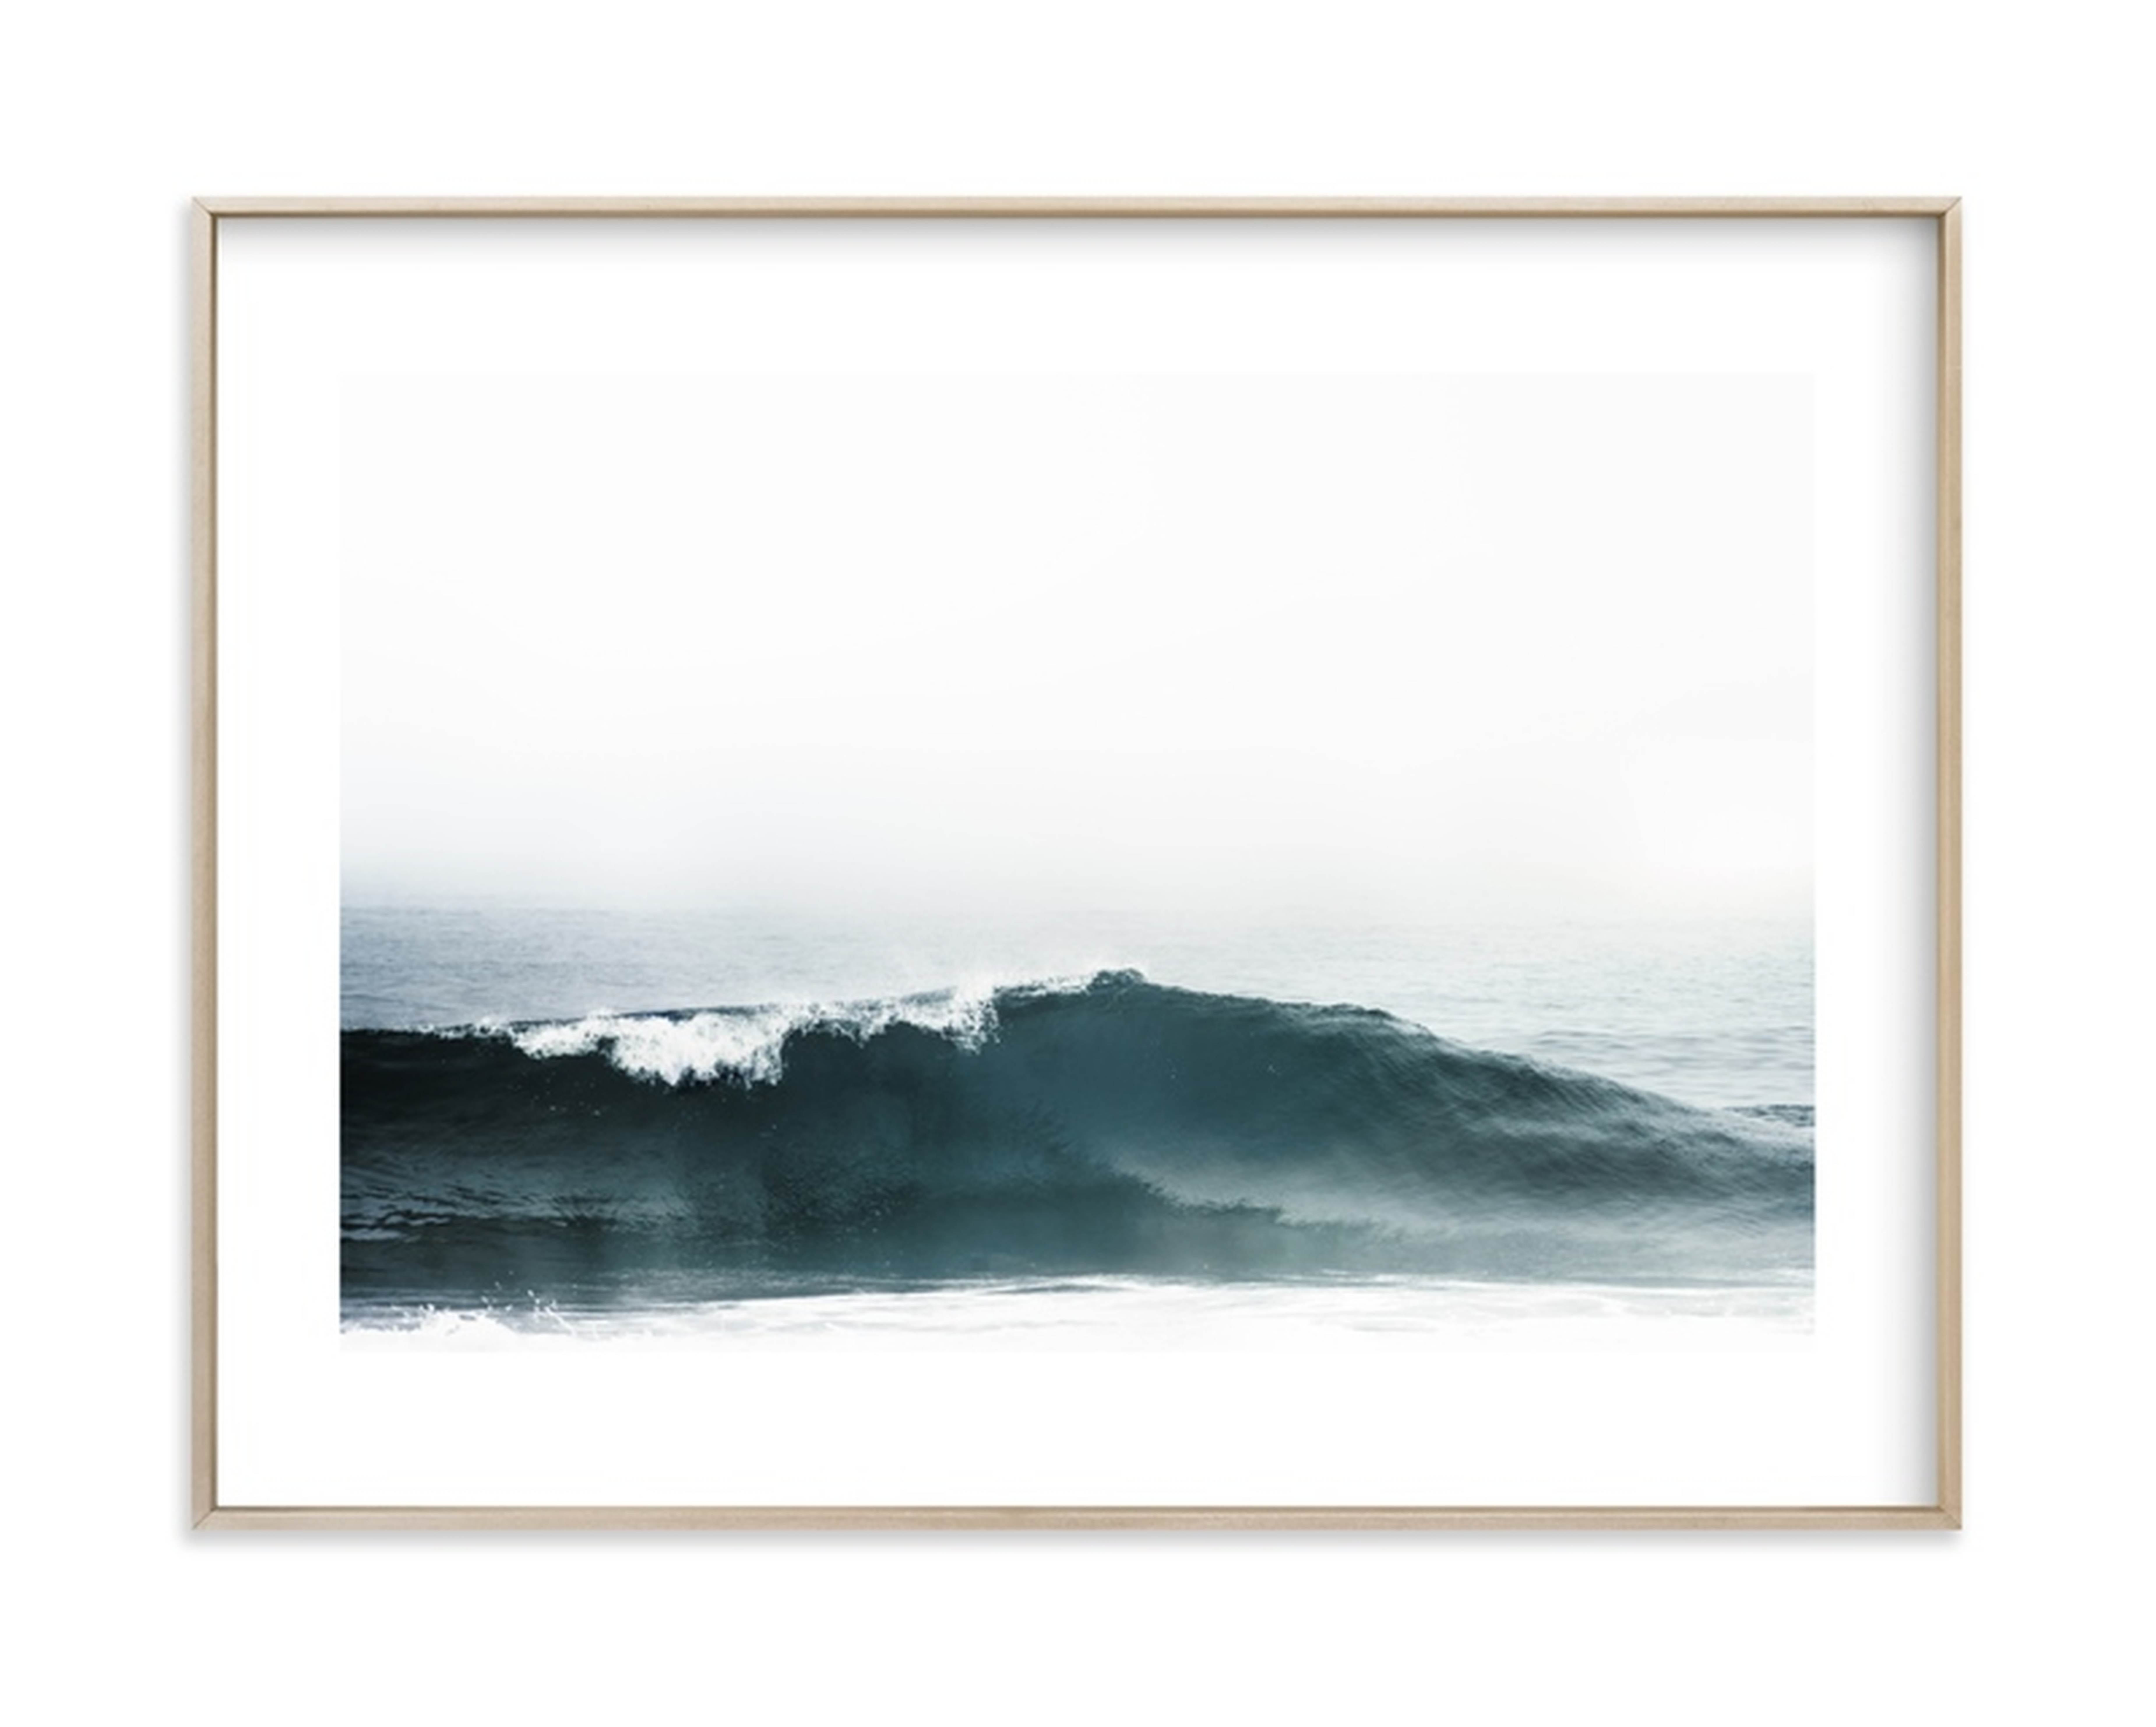 Mariner's Muse, 18" x 24", Vibrant Ocean, White Border - Minted